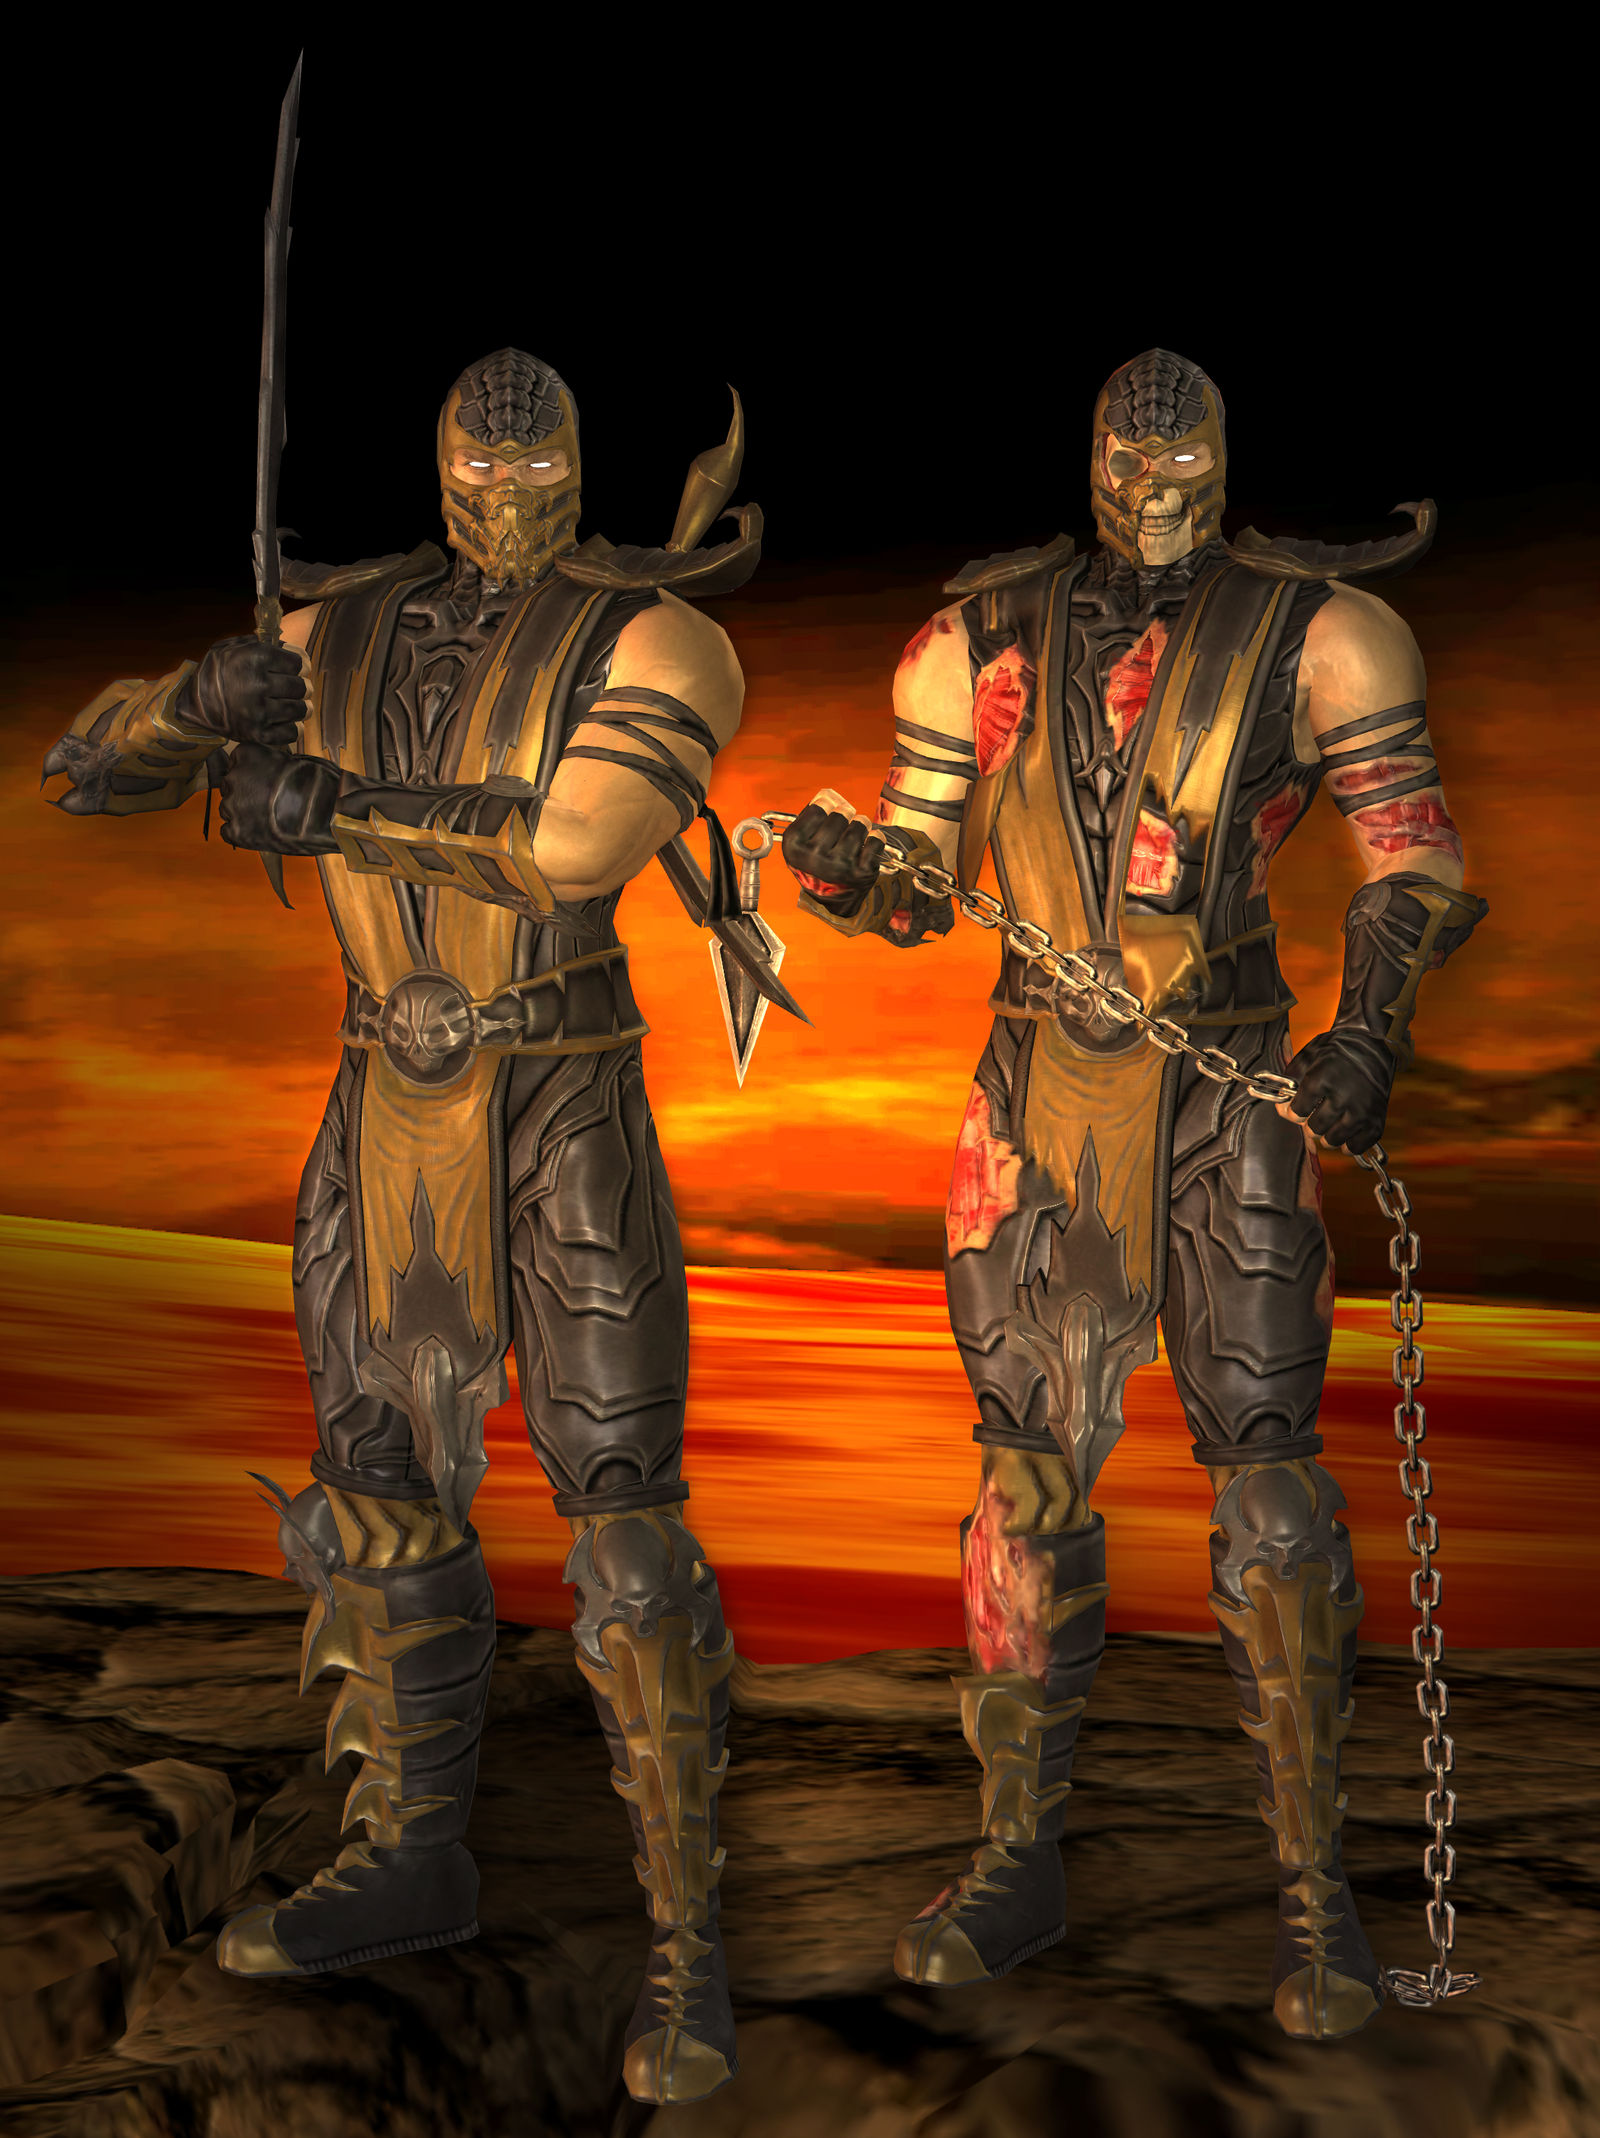 Shao Kahn - Mortal Kombat 9 by romero1718 on DeviantArt